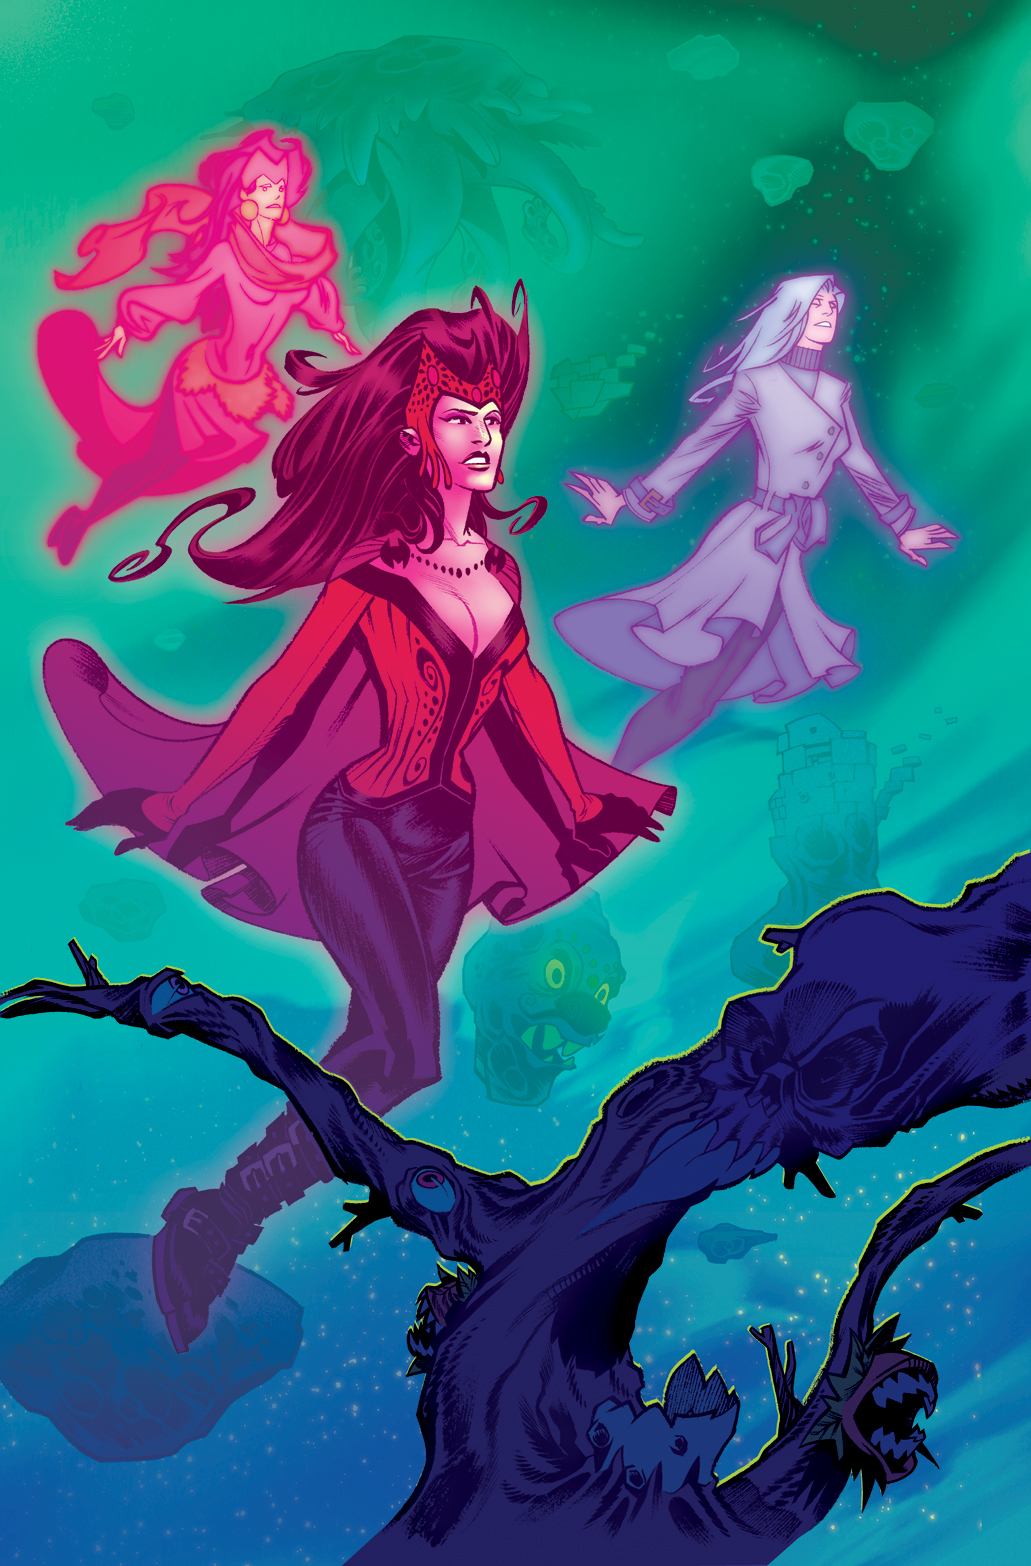 Scarlet Witch #14